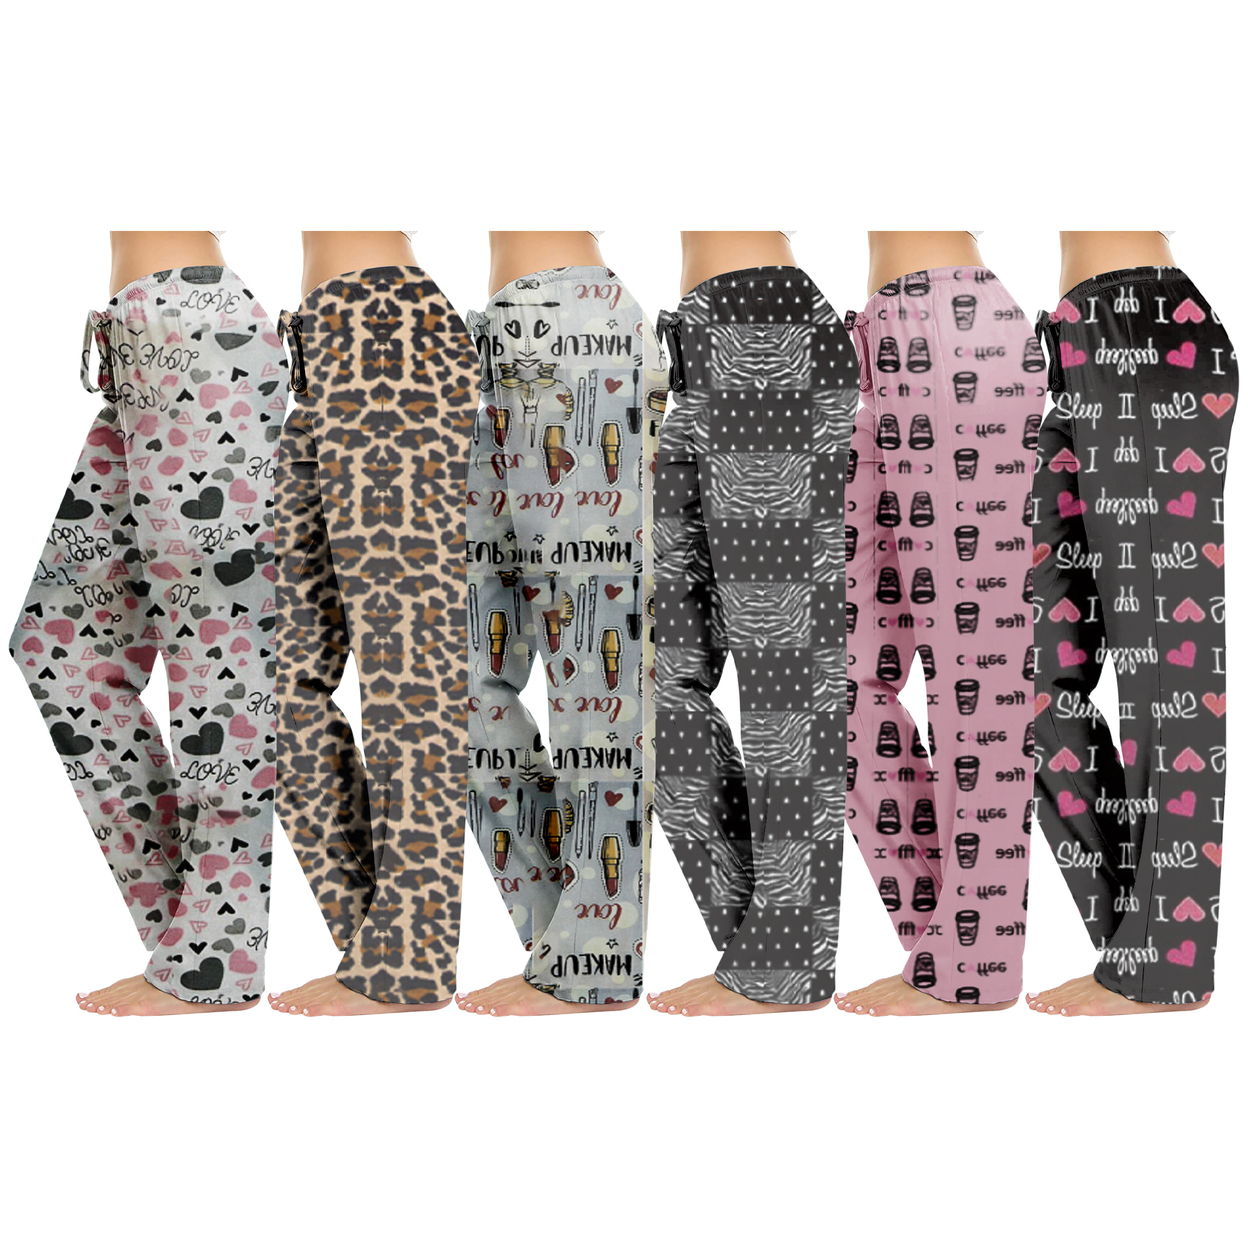 2-Pack: Women's Casual Fun Printed Lightweight Lounge Terry Knit Pajama Bottom Pants - Large, Animal